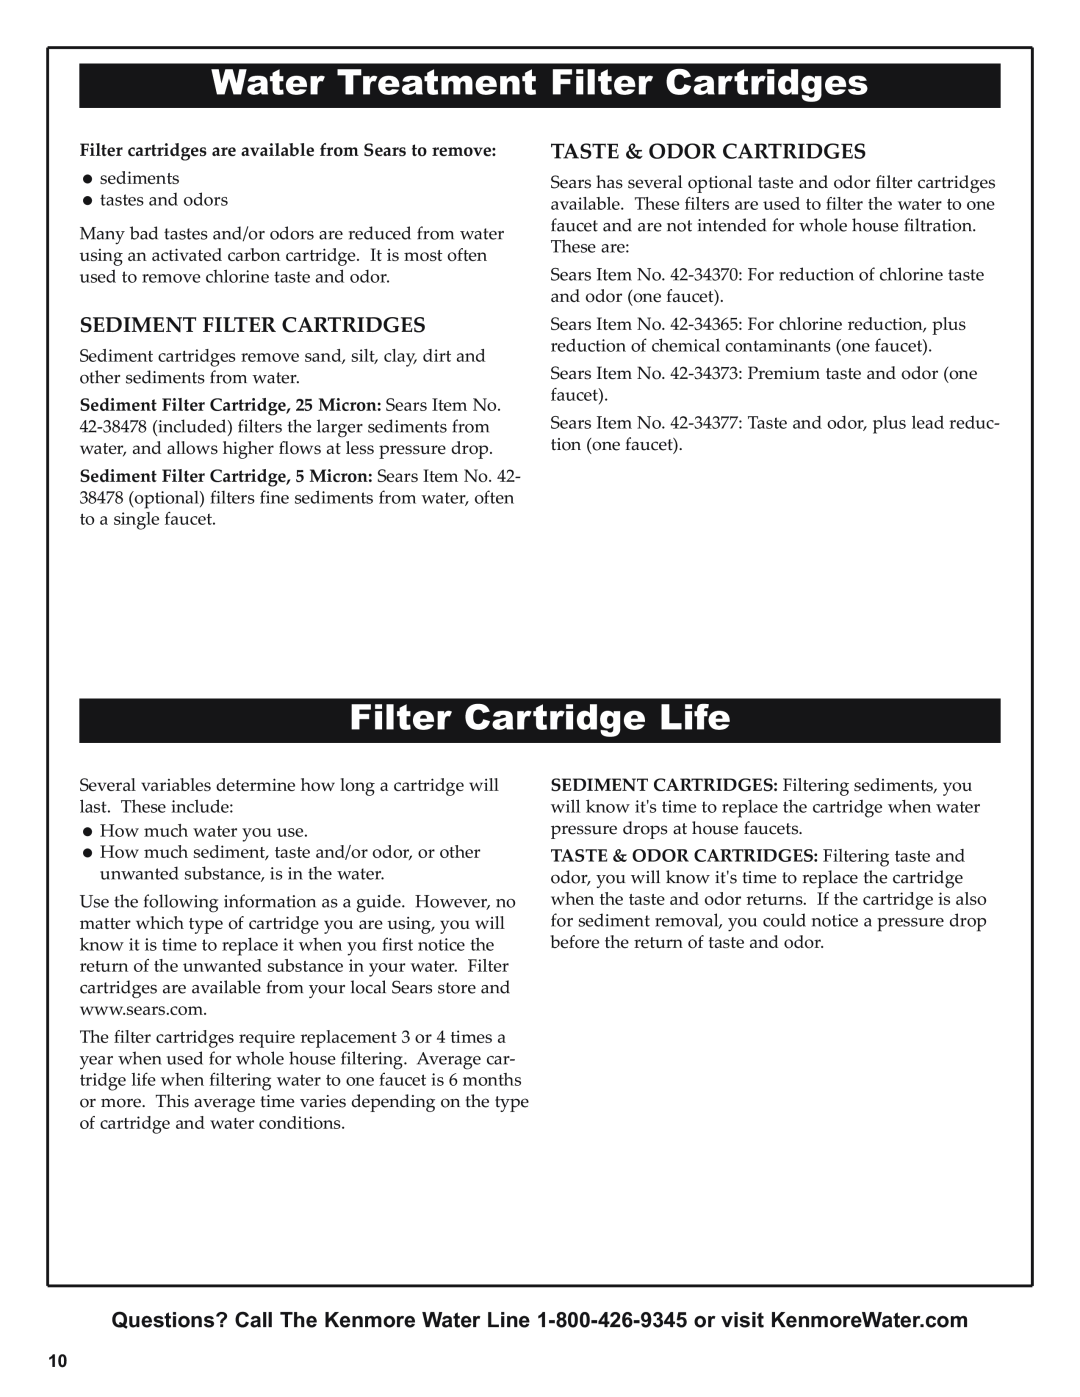 Kenmore 625.38445 owner manual Water Treatment Filter Cartridges, Filter Cartridge Life, Sediment Filter Cartridges 